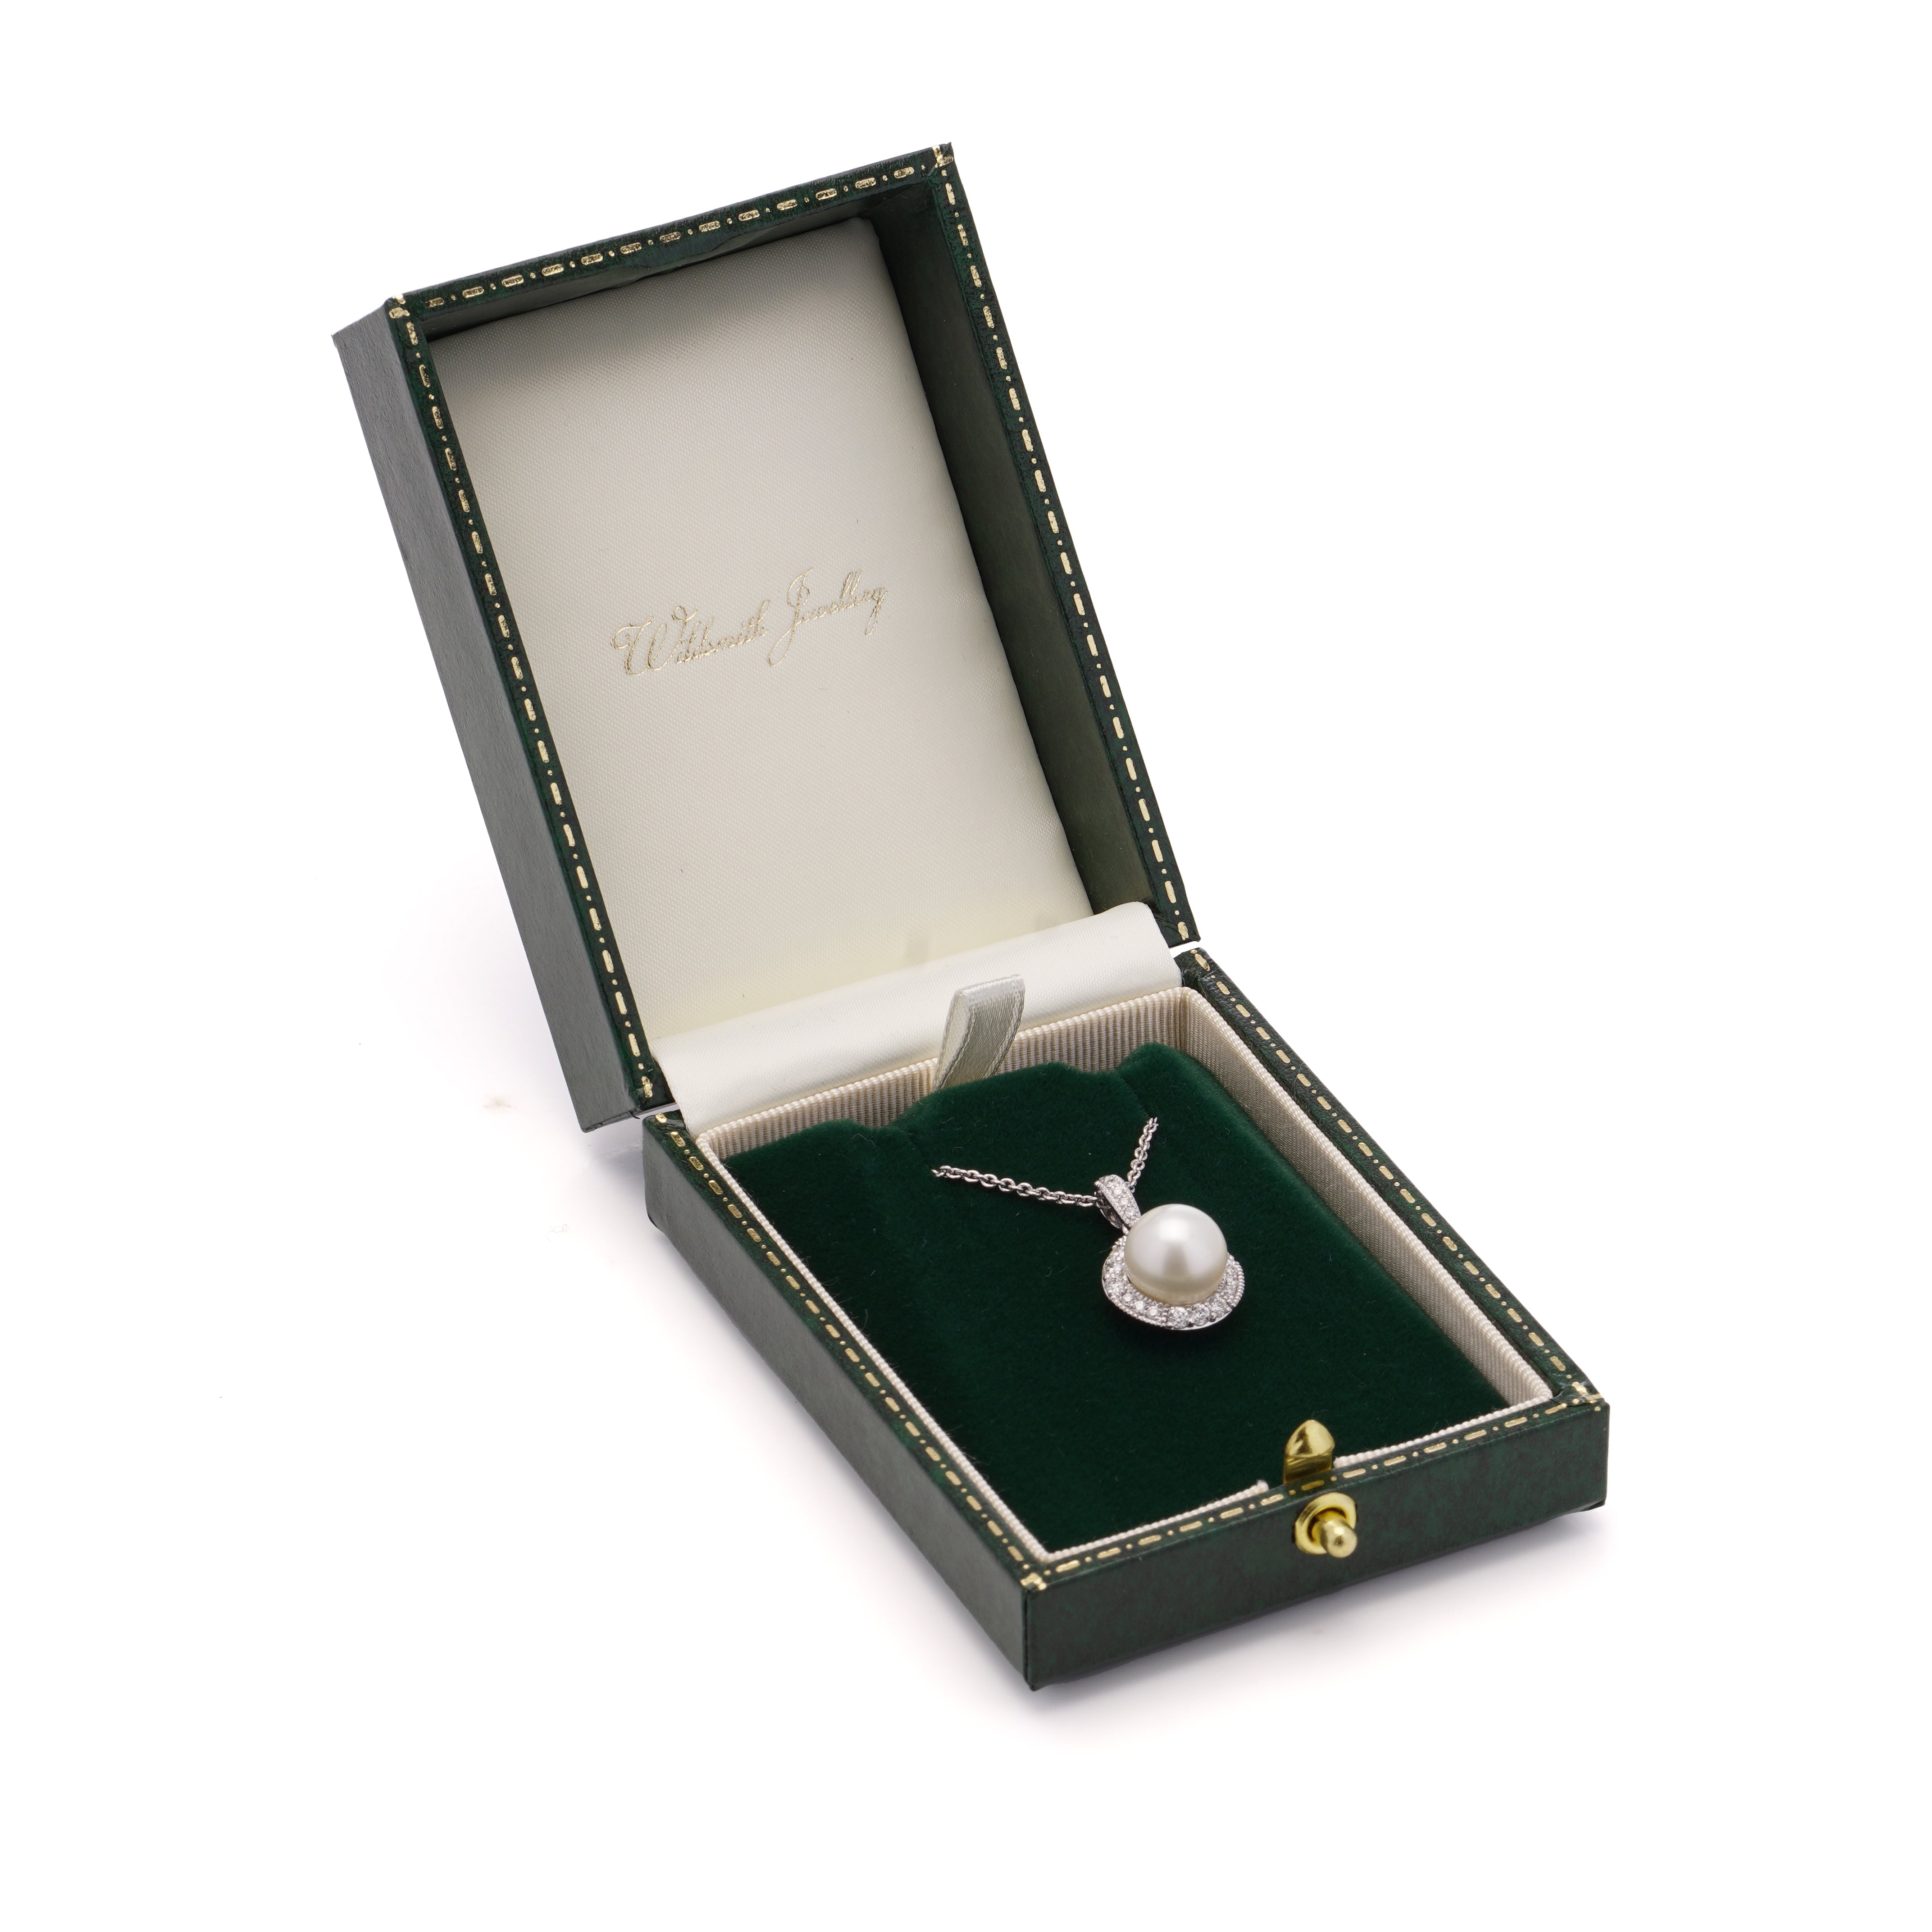 Pearl & Diamond Cluster Pendant - Wildsmith Jewellery